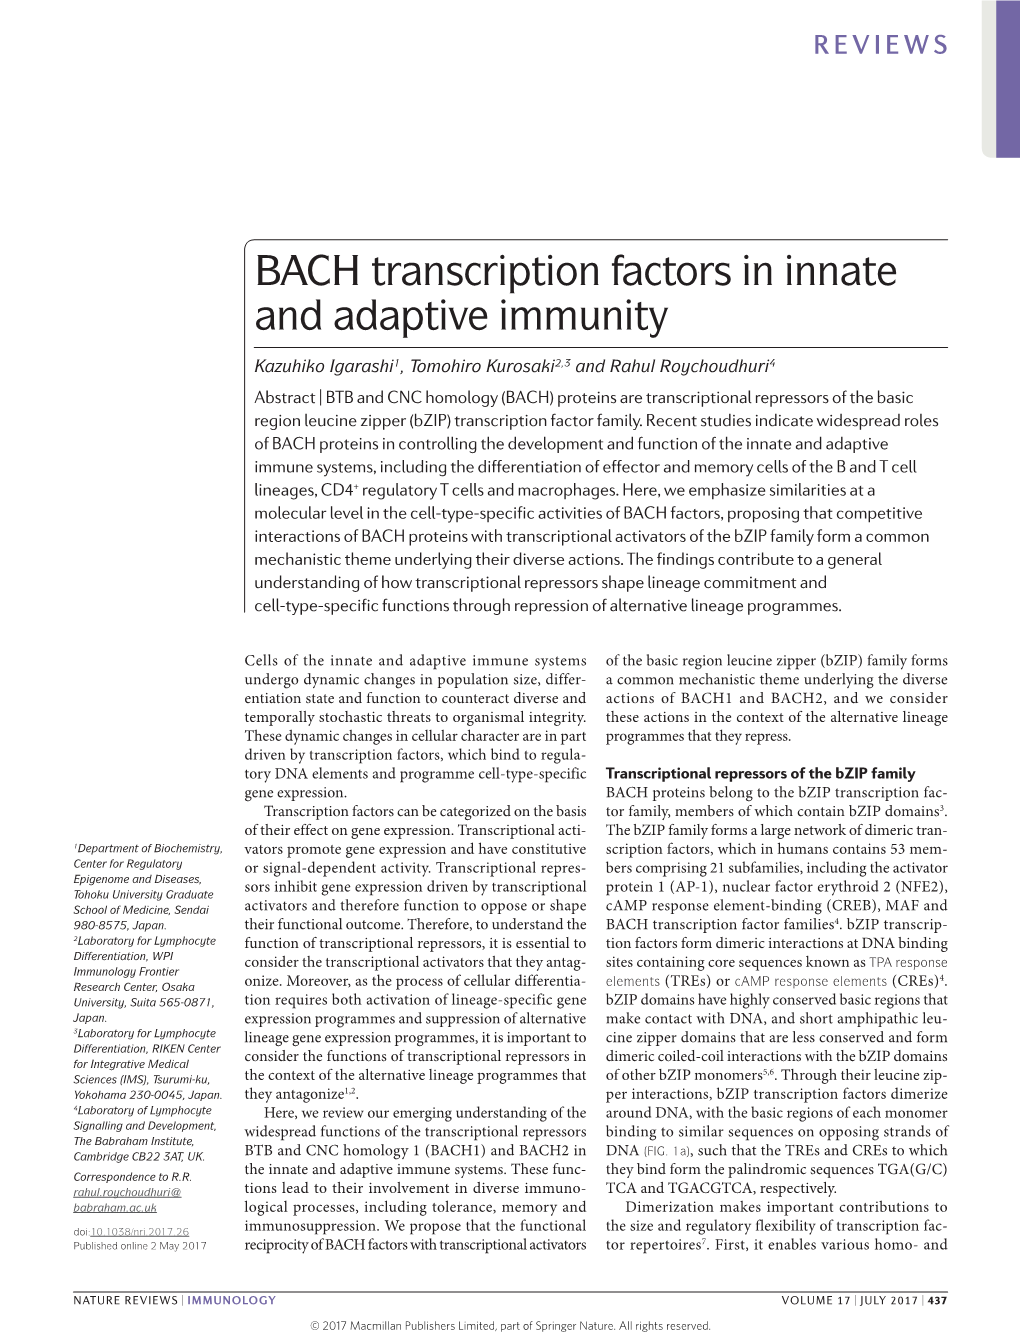 BACH Transcription Factors in Innate and Adaptive Immunity